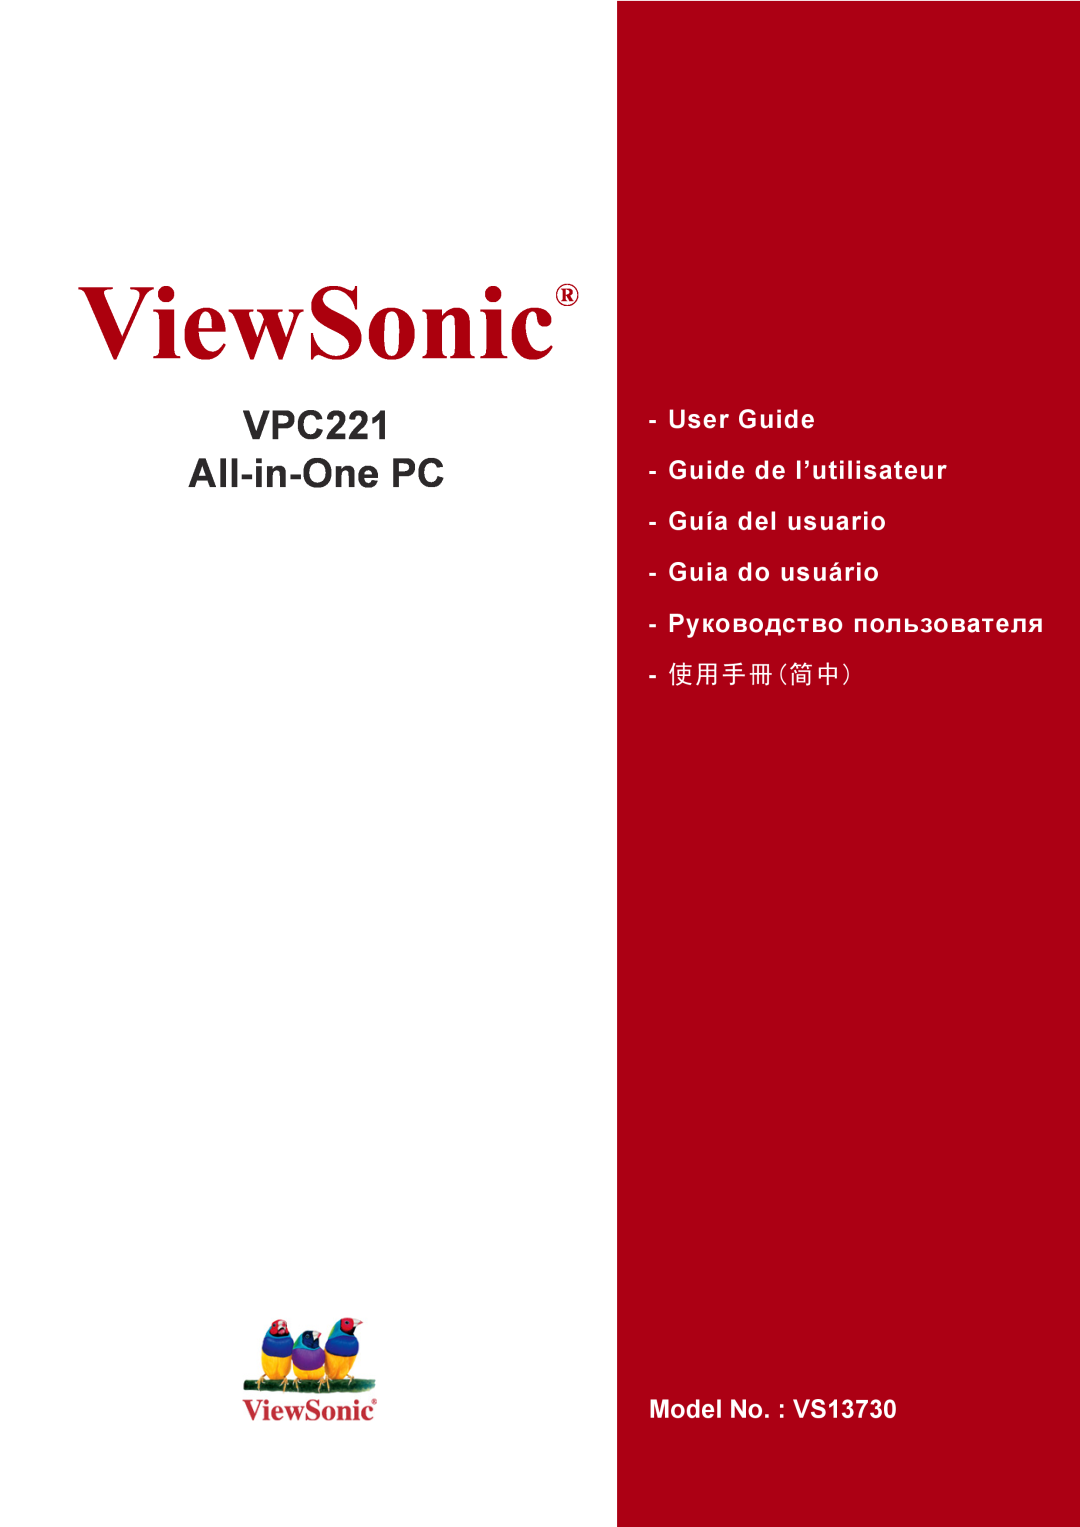 ViewSonic VS13730 manual ViewSonic, VPC221 All-in-OnePC, User Guide Guide de l’utilisateur, Pyководство пользователя 